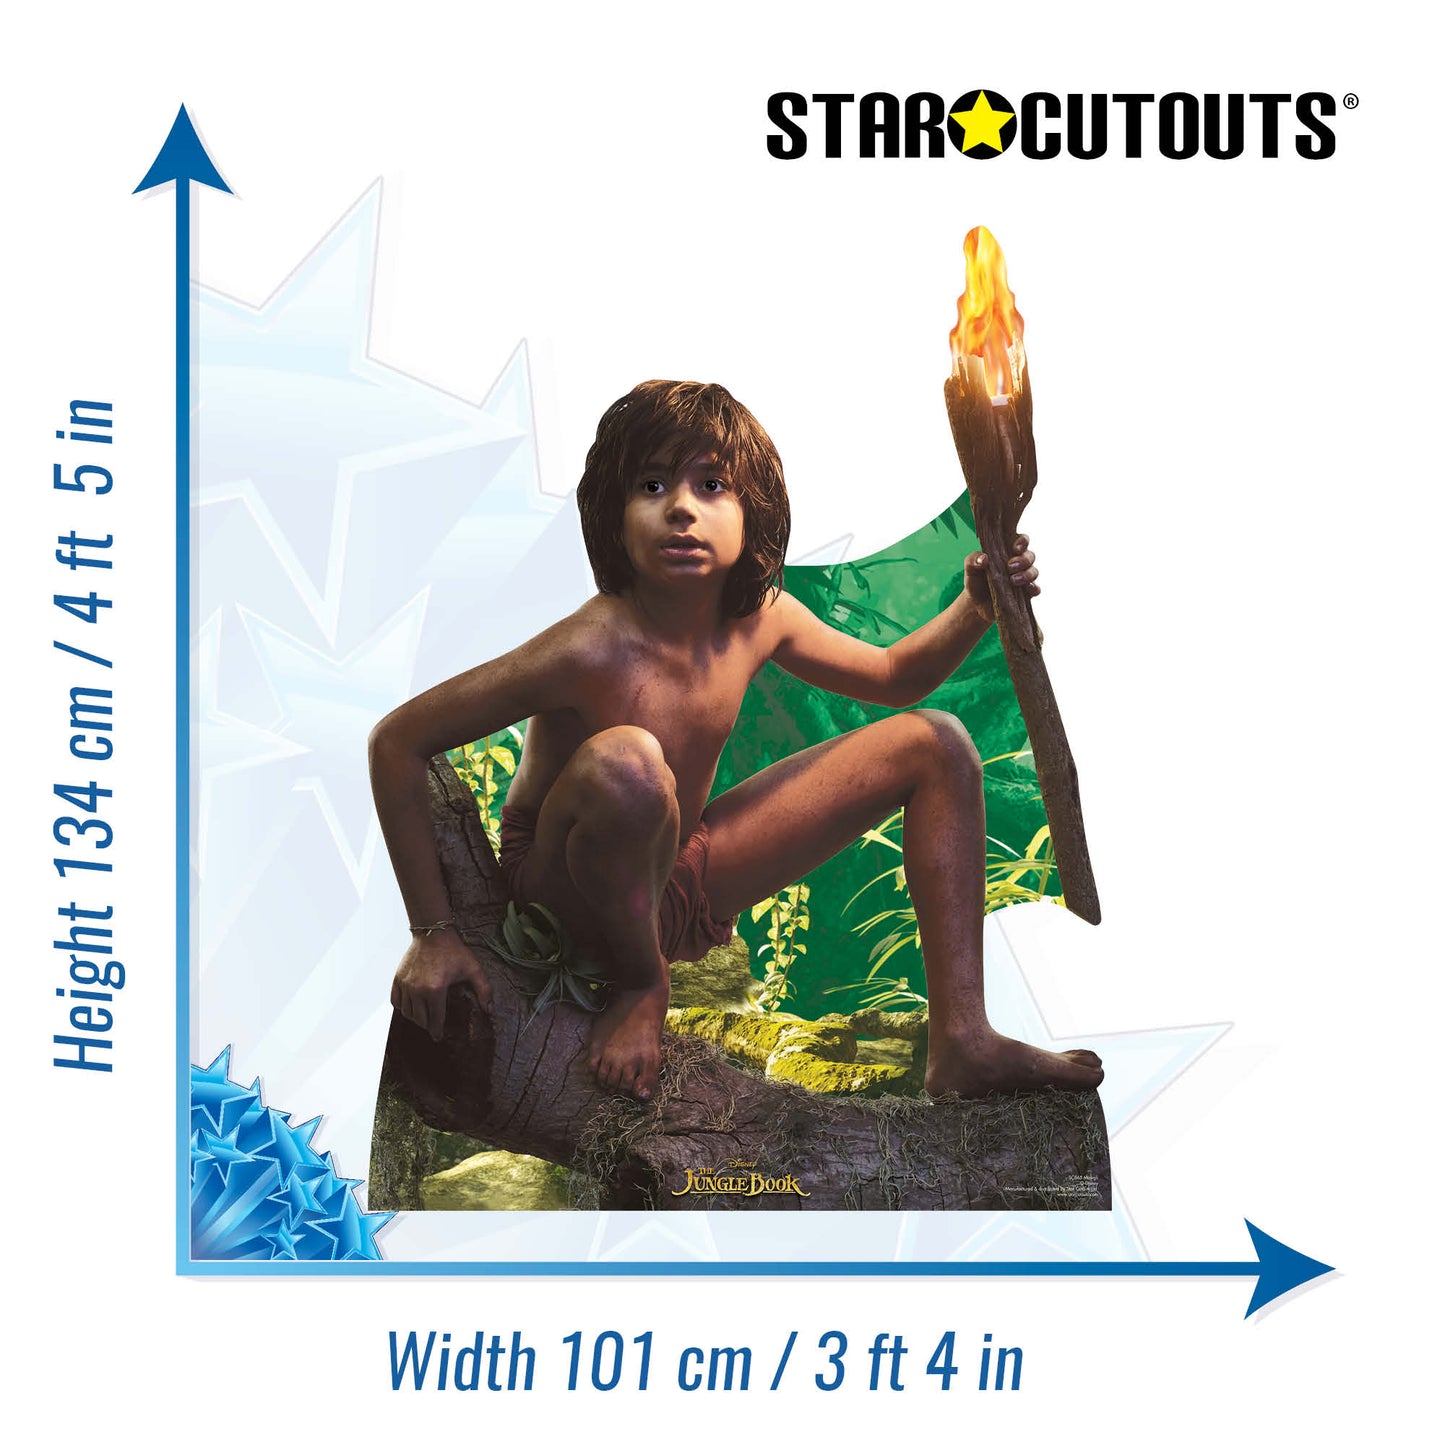 Mowgli The Man Cub Live Action Jungle Book Cardboard Cut Out Height 134cm